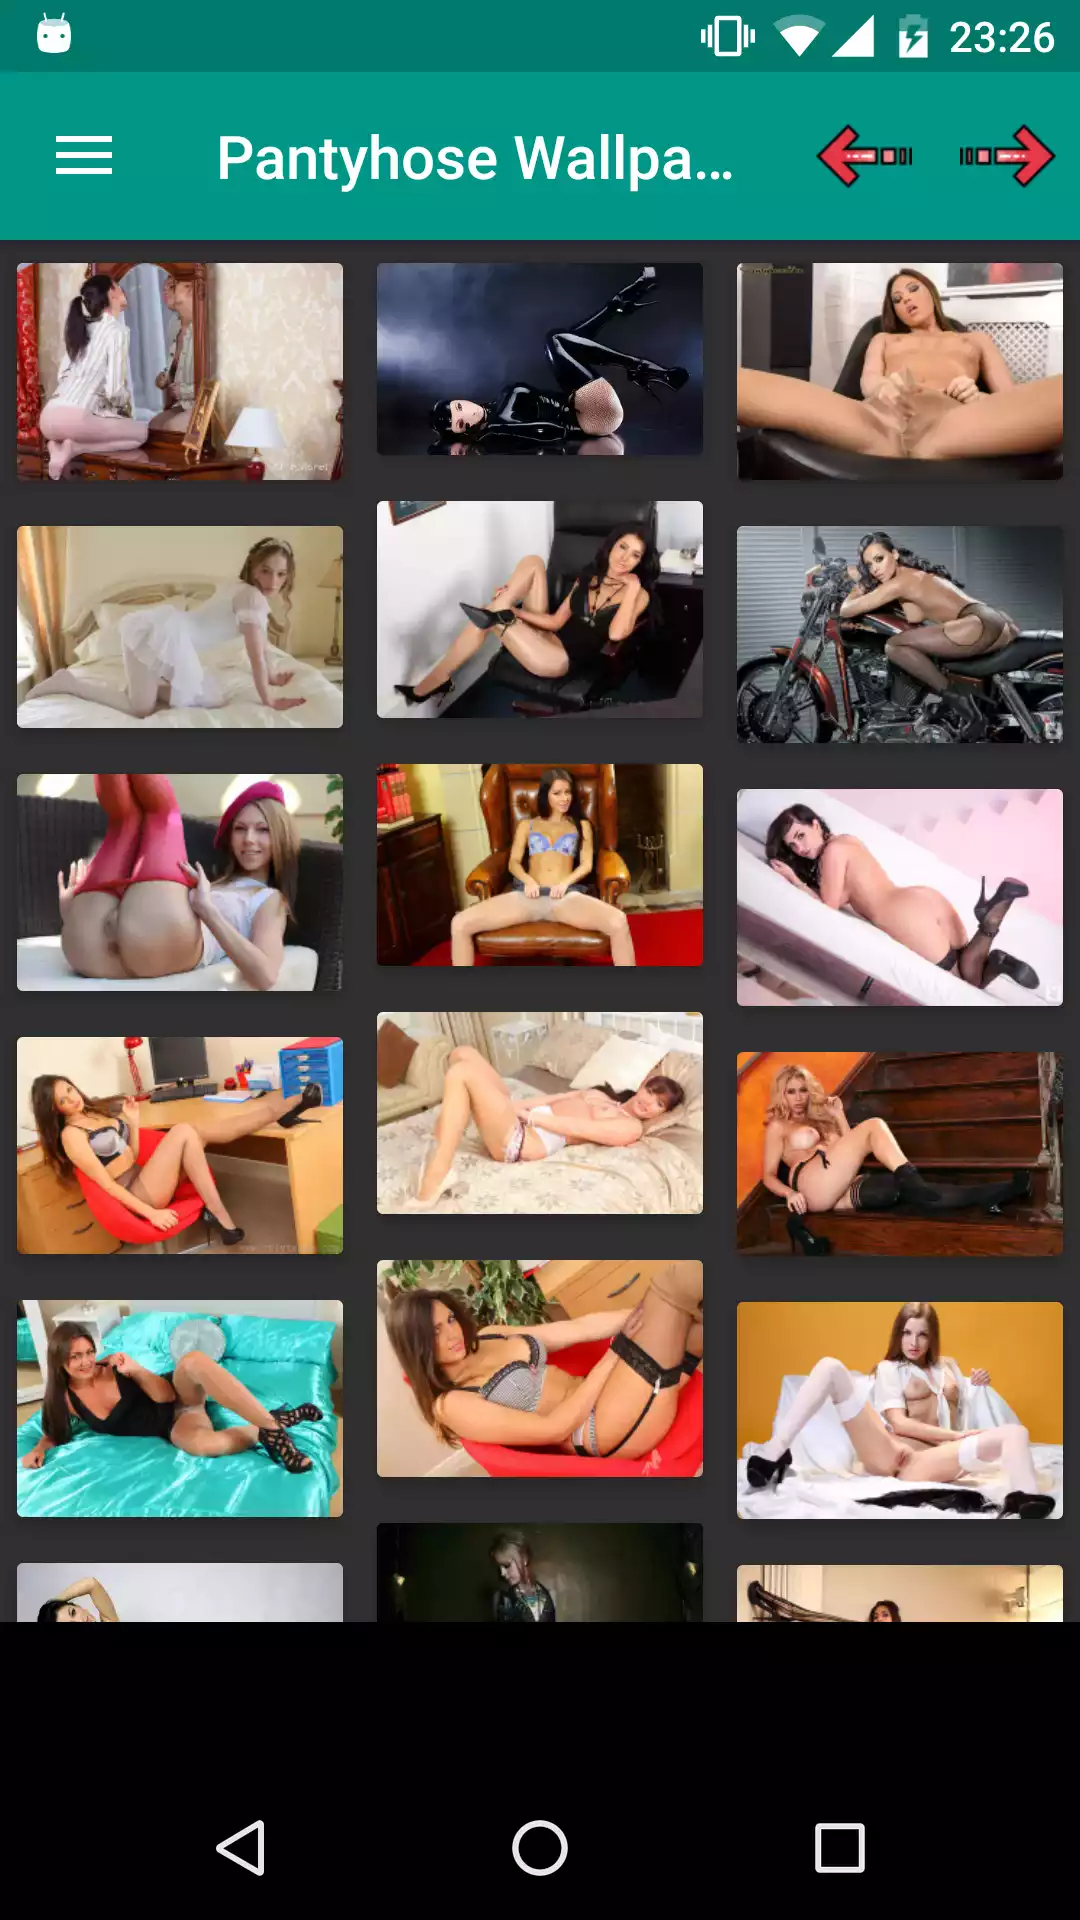 Pantyhouse backgrounds finder,porn,hentie,apk,photos,manga,for,amateur,adult,pornstar,sexy,anime,best,pics,pantyhouse,apps,pornstars,app,erotic,fetish,futanari,pictures,wallpapers,image,hentai,download,nylon,android